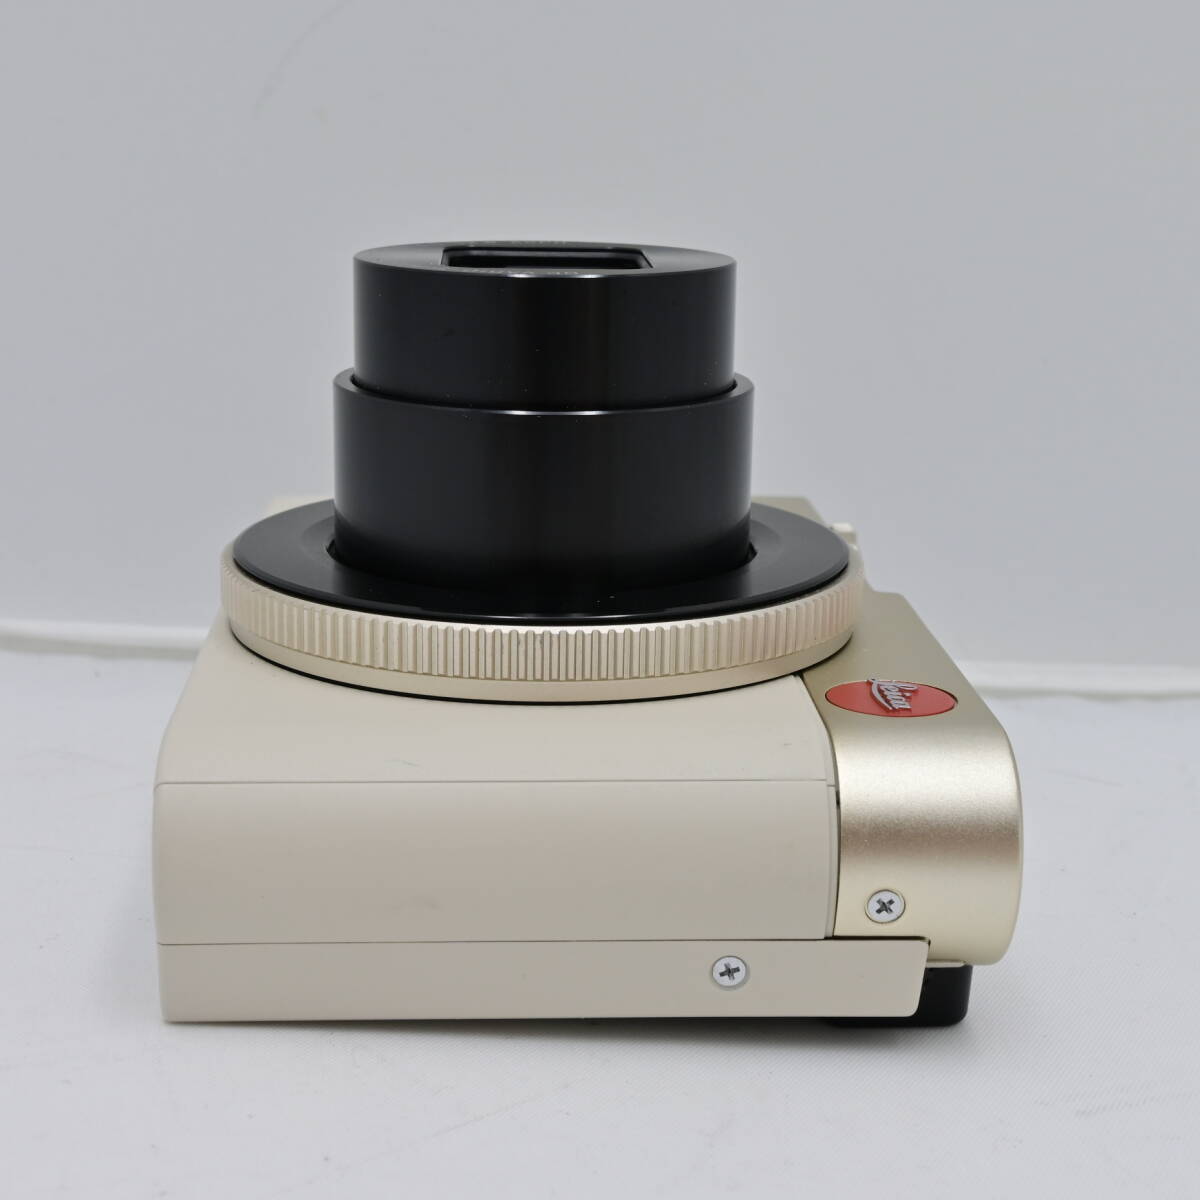 Leica デジタルカメラ ライカC Typ 112 1210万画素 ライトゴールド_画像4